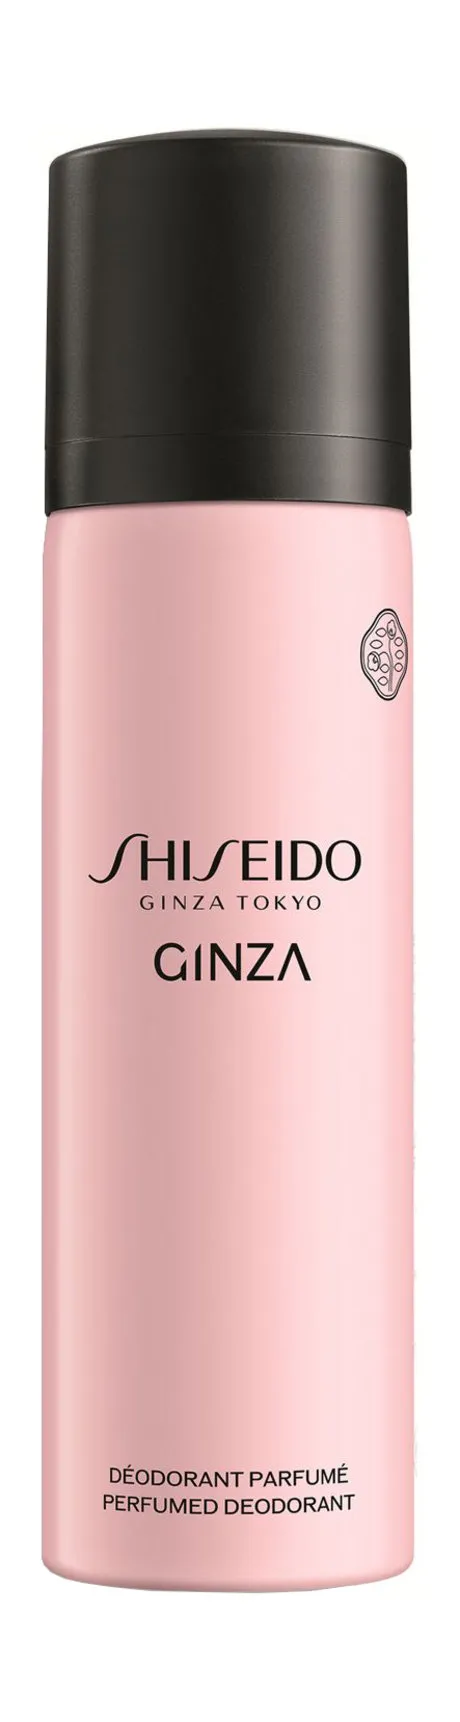 Ginza Perfumed Deodorant, Shiseido, 2163 руб